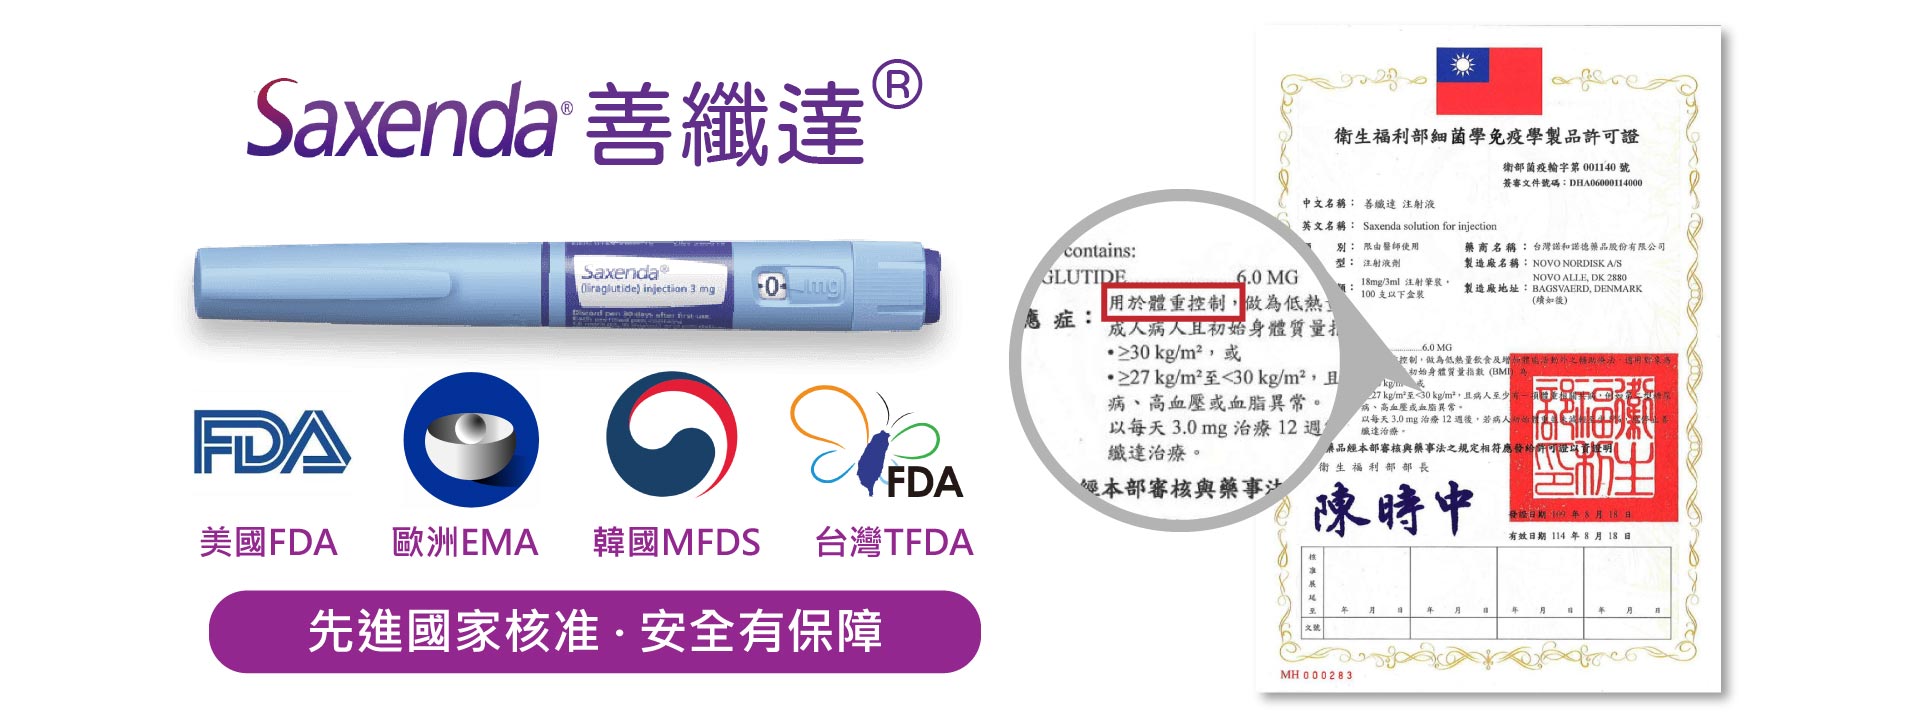 美國FDA 歐美EMA 韓國MFDS 台灣TFDA Saxenda 善纖達合法體重控制藥物